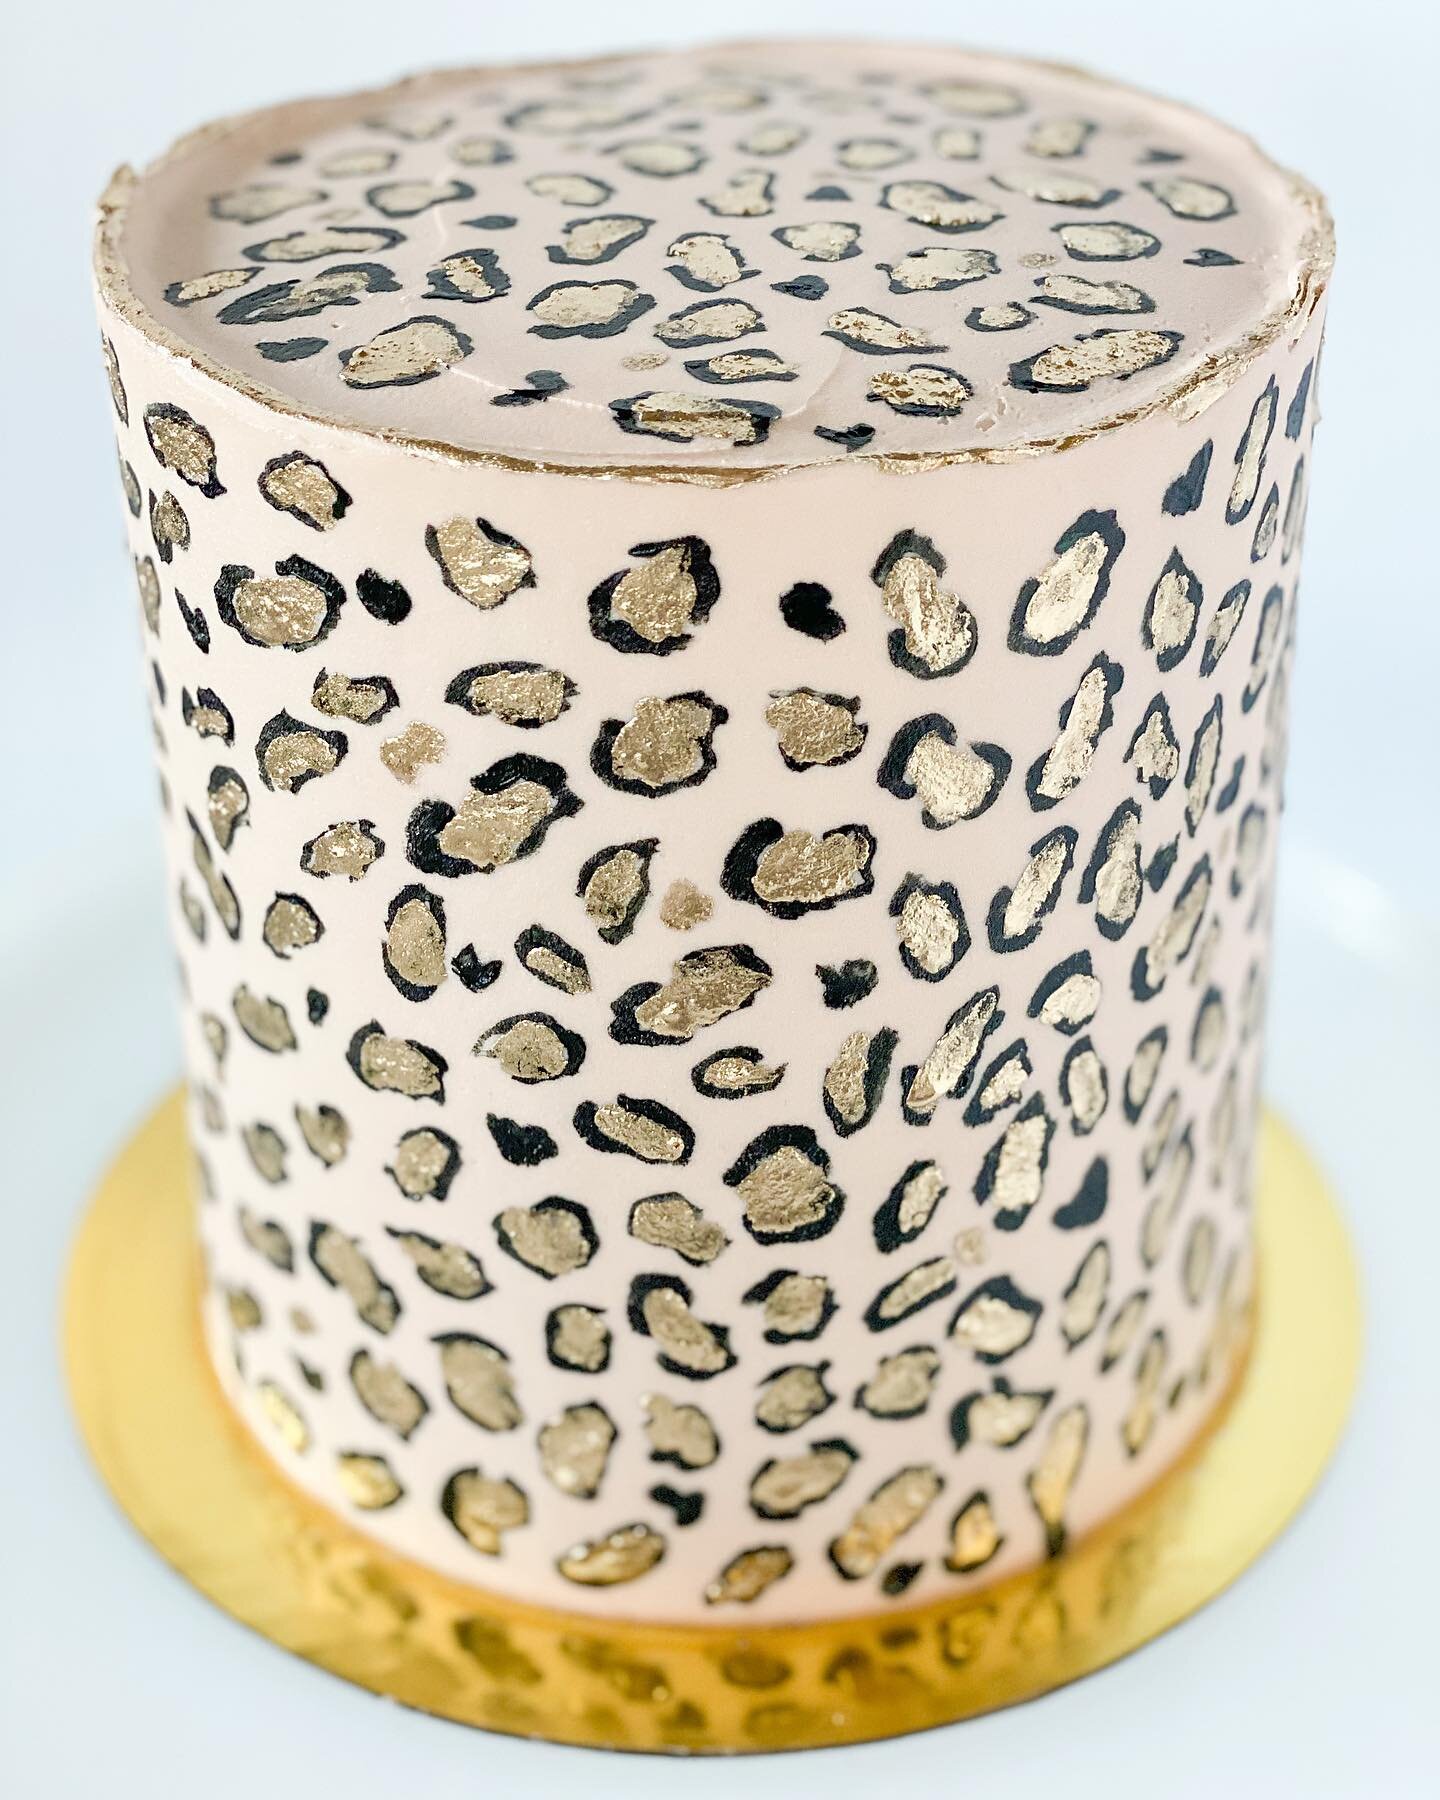 Hand painted cheetah cake 🤎✨
.
.
.
.
.
#cakesofinstagram #cakeart #cakeinspo #cakesdaily #cake #instacake #cakegoals  #dailyfoodfeed #cakestyle #caketrends #cakeoftheday #cakedecorating #buzzfeed #cakedesign #eeeeeats #cakegram #birthdaycake #cheeta